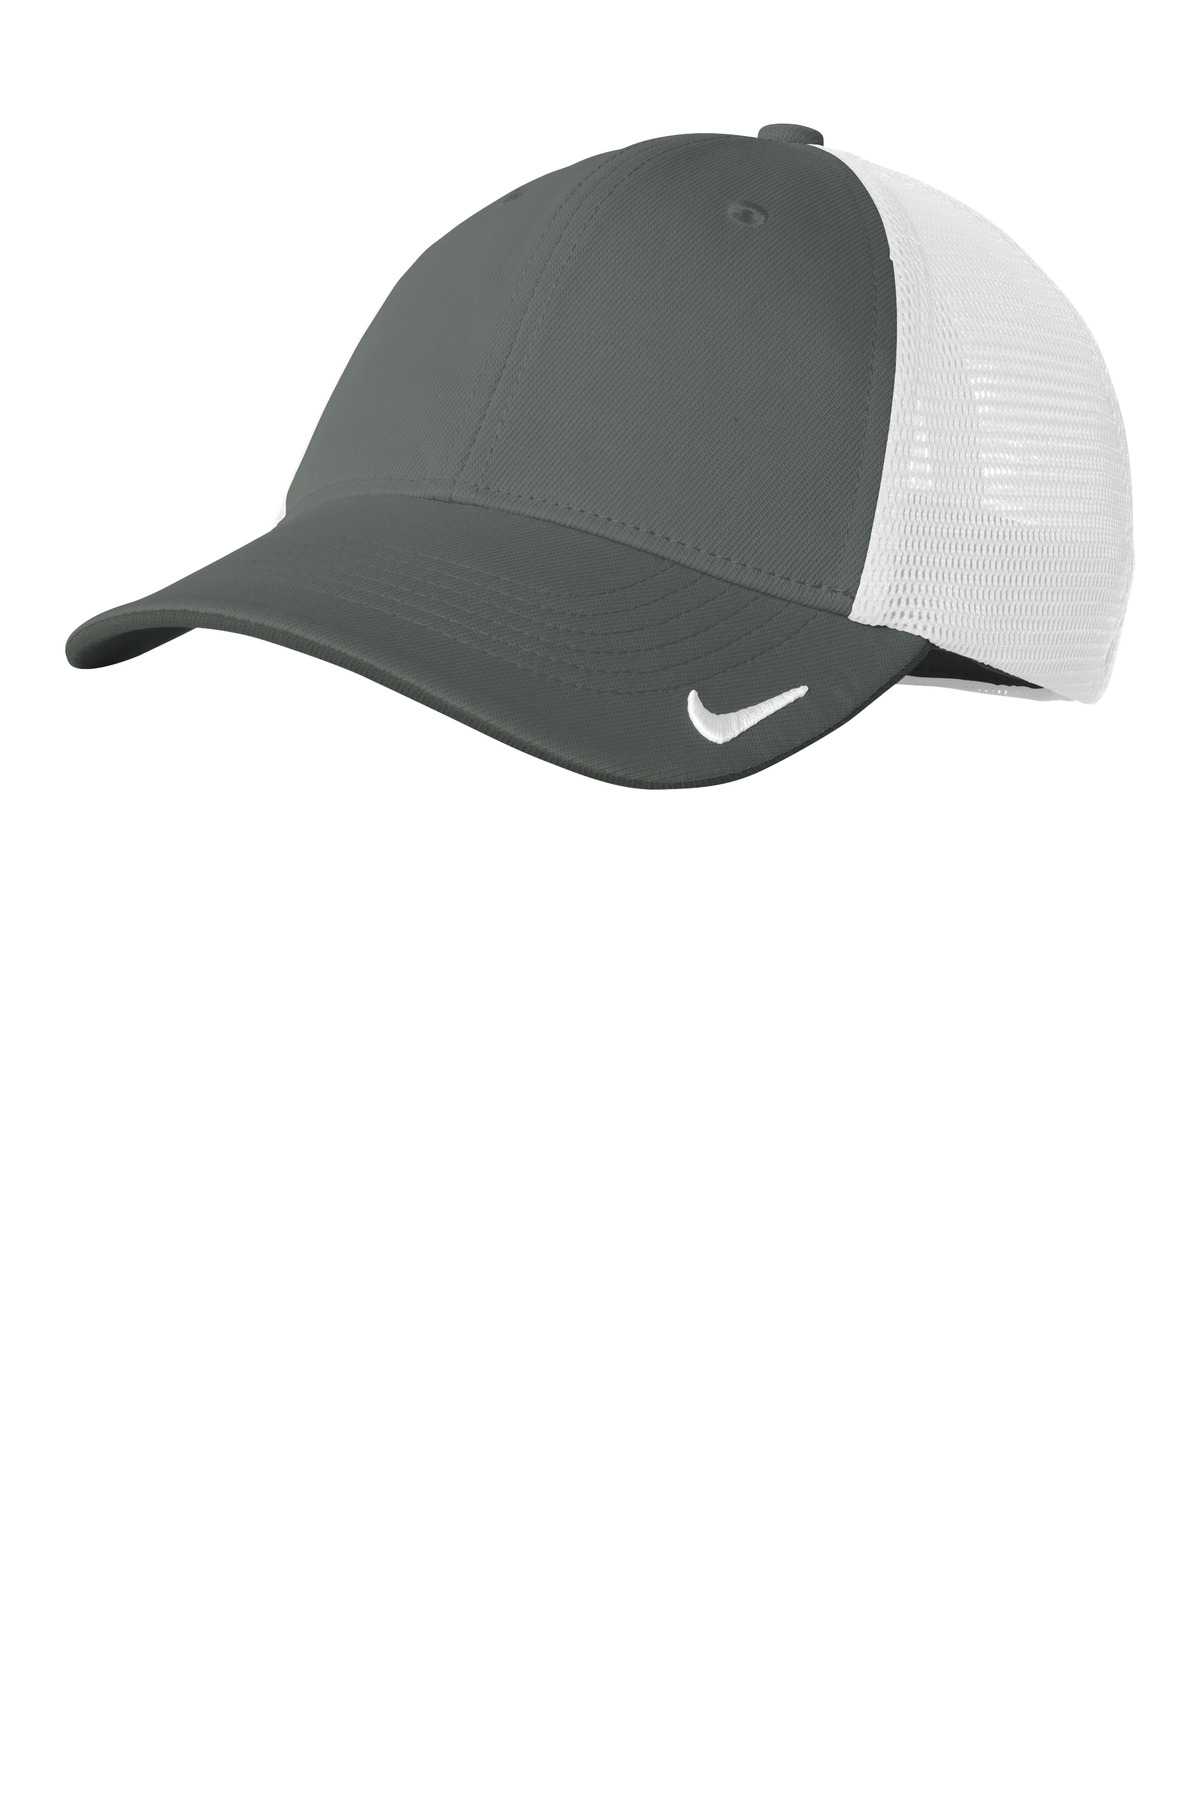 Nike Stretch-to-Fit Mesh Back Cap-Nike